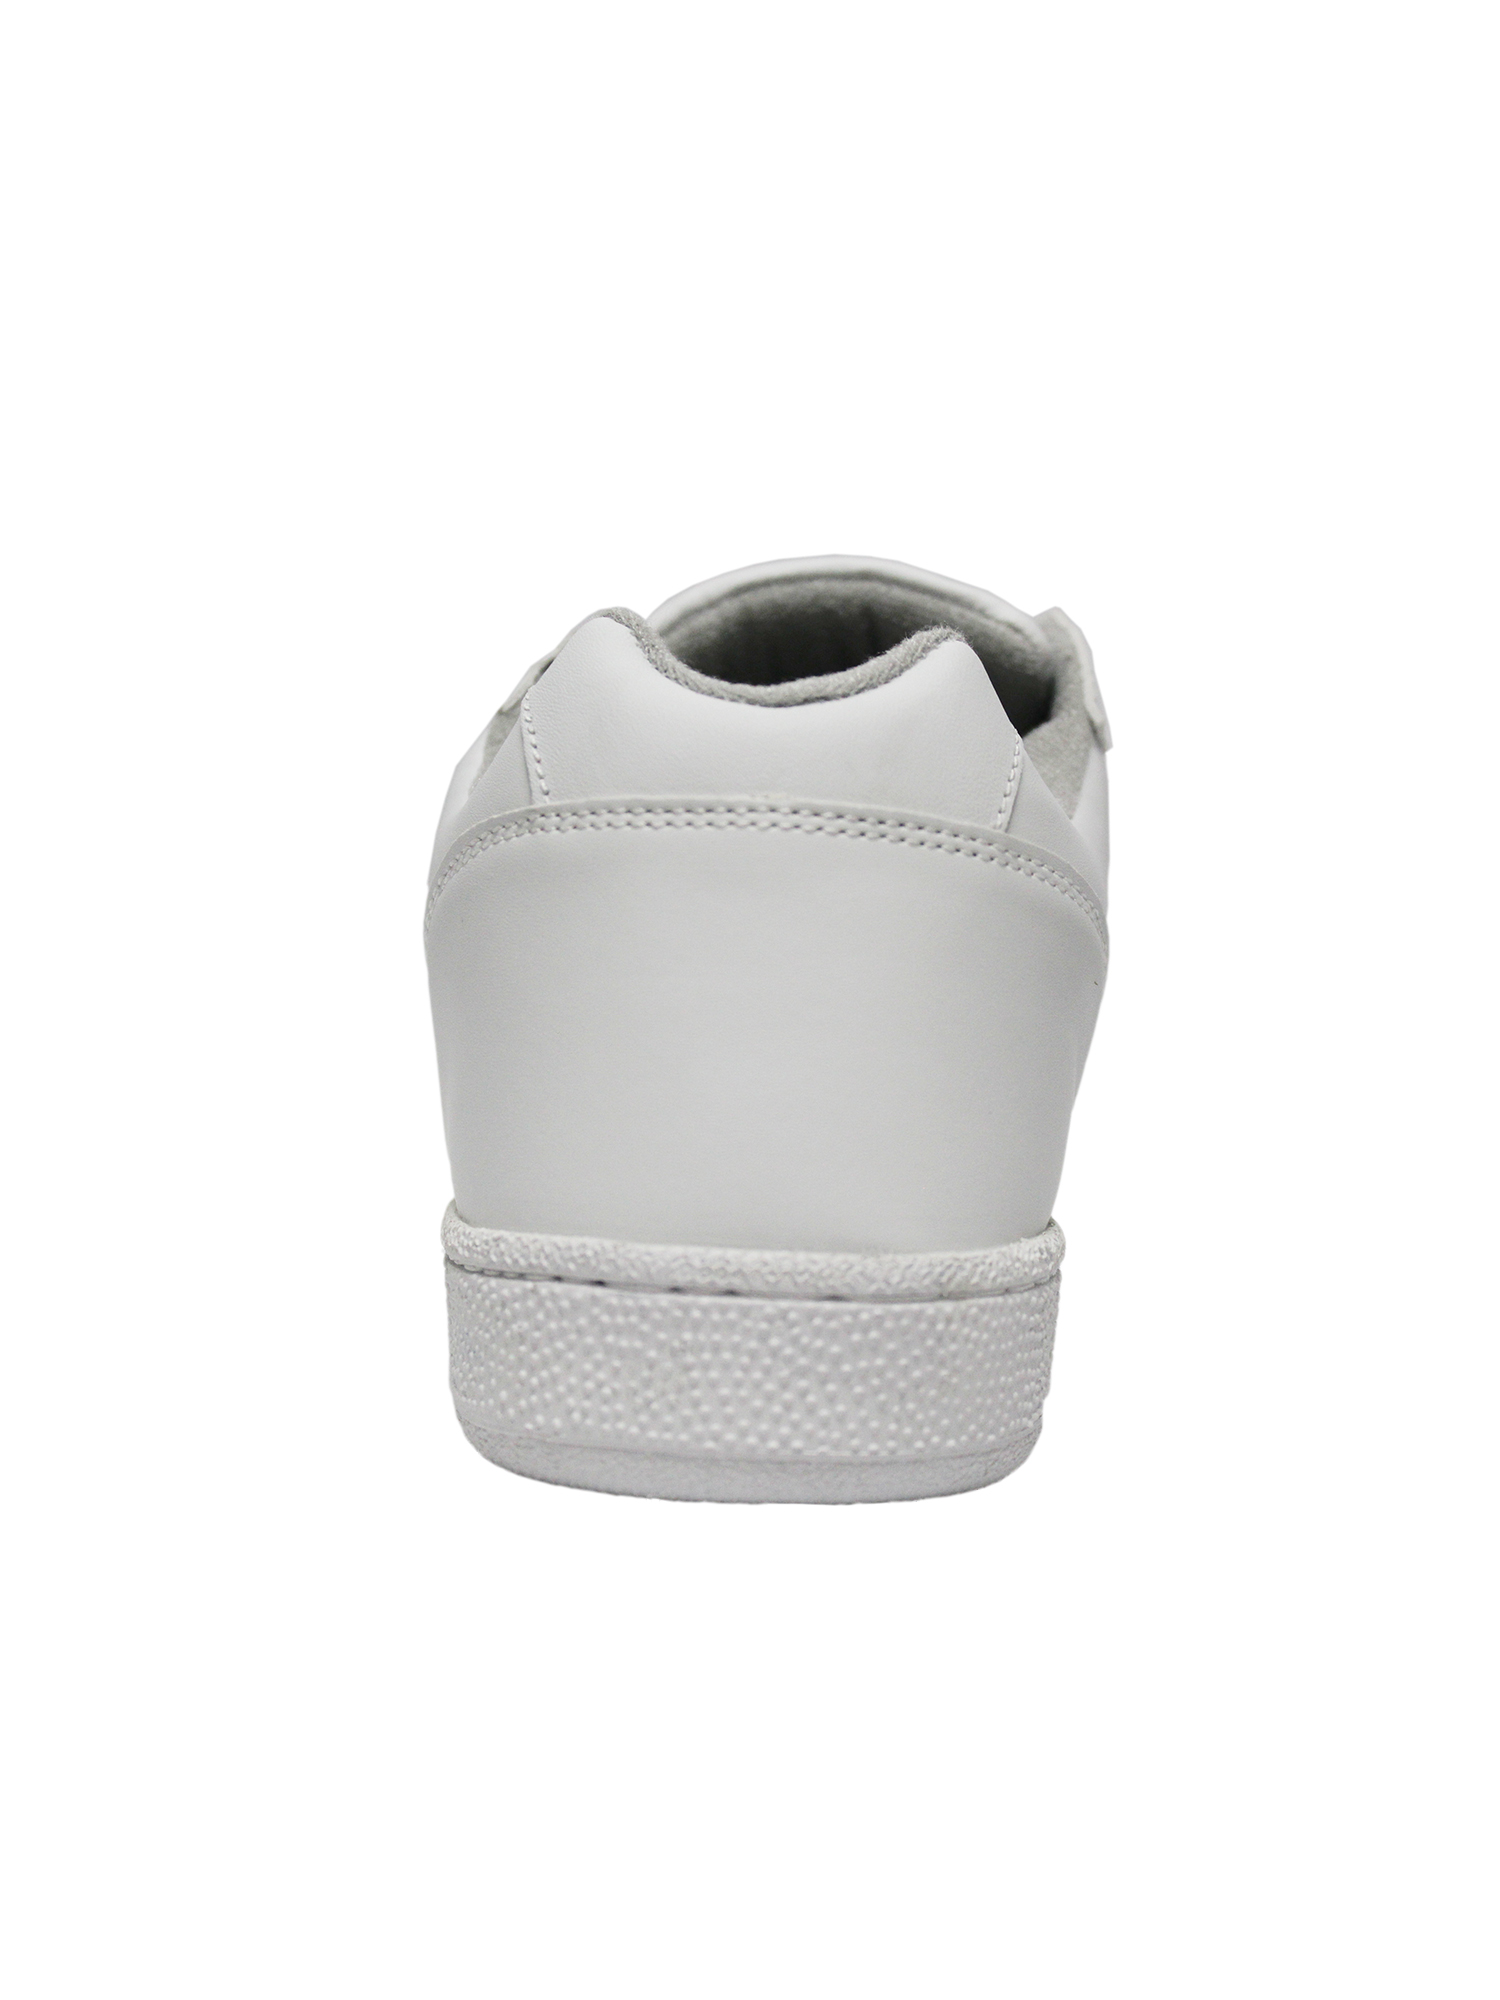 Tanleewa Men's Leather Strap Sneakers Lightweight Hook and Loop Walking Shoe Size 8.5 Adult Male - image 5 of 5